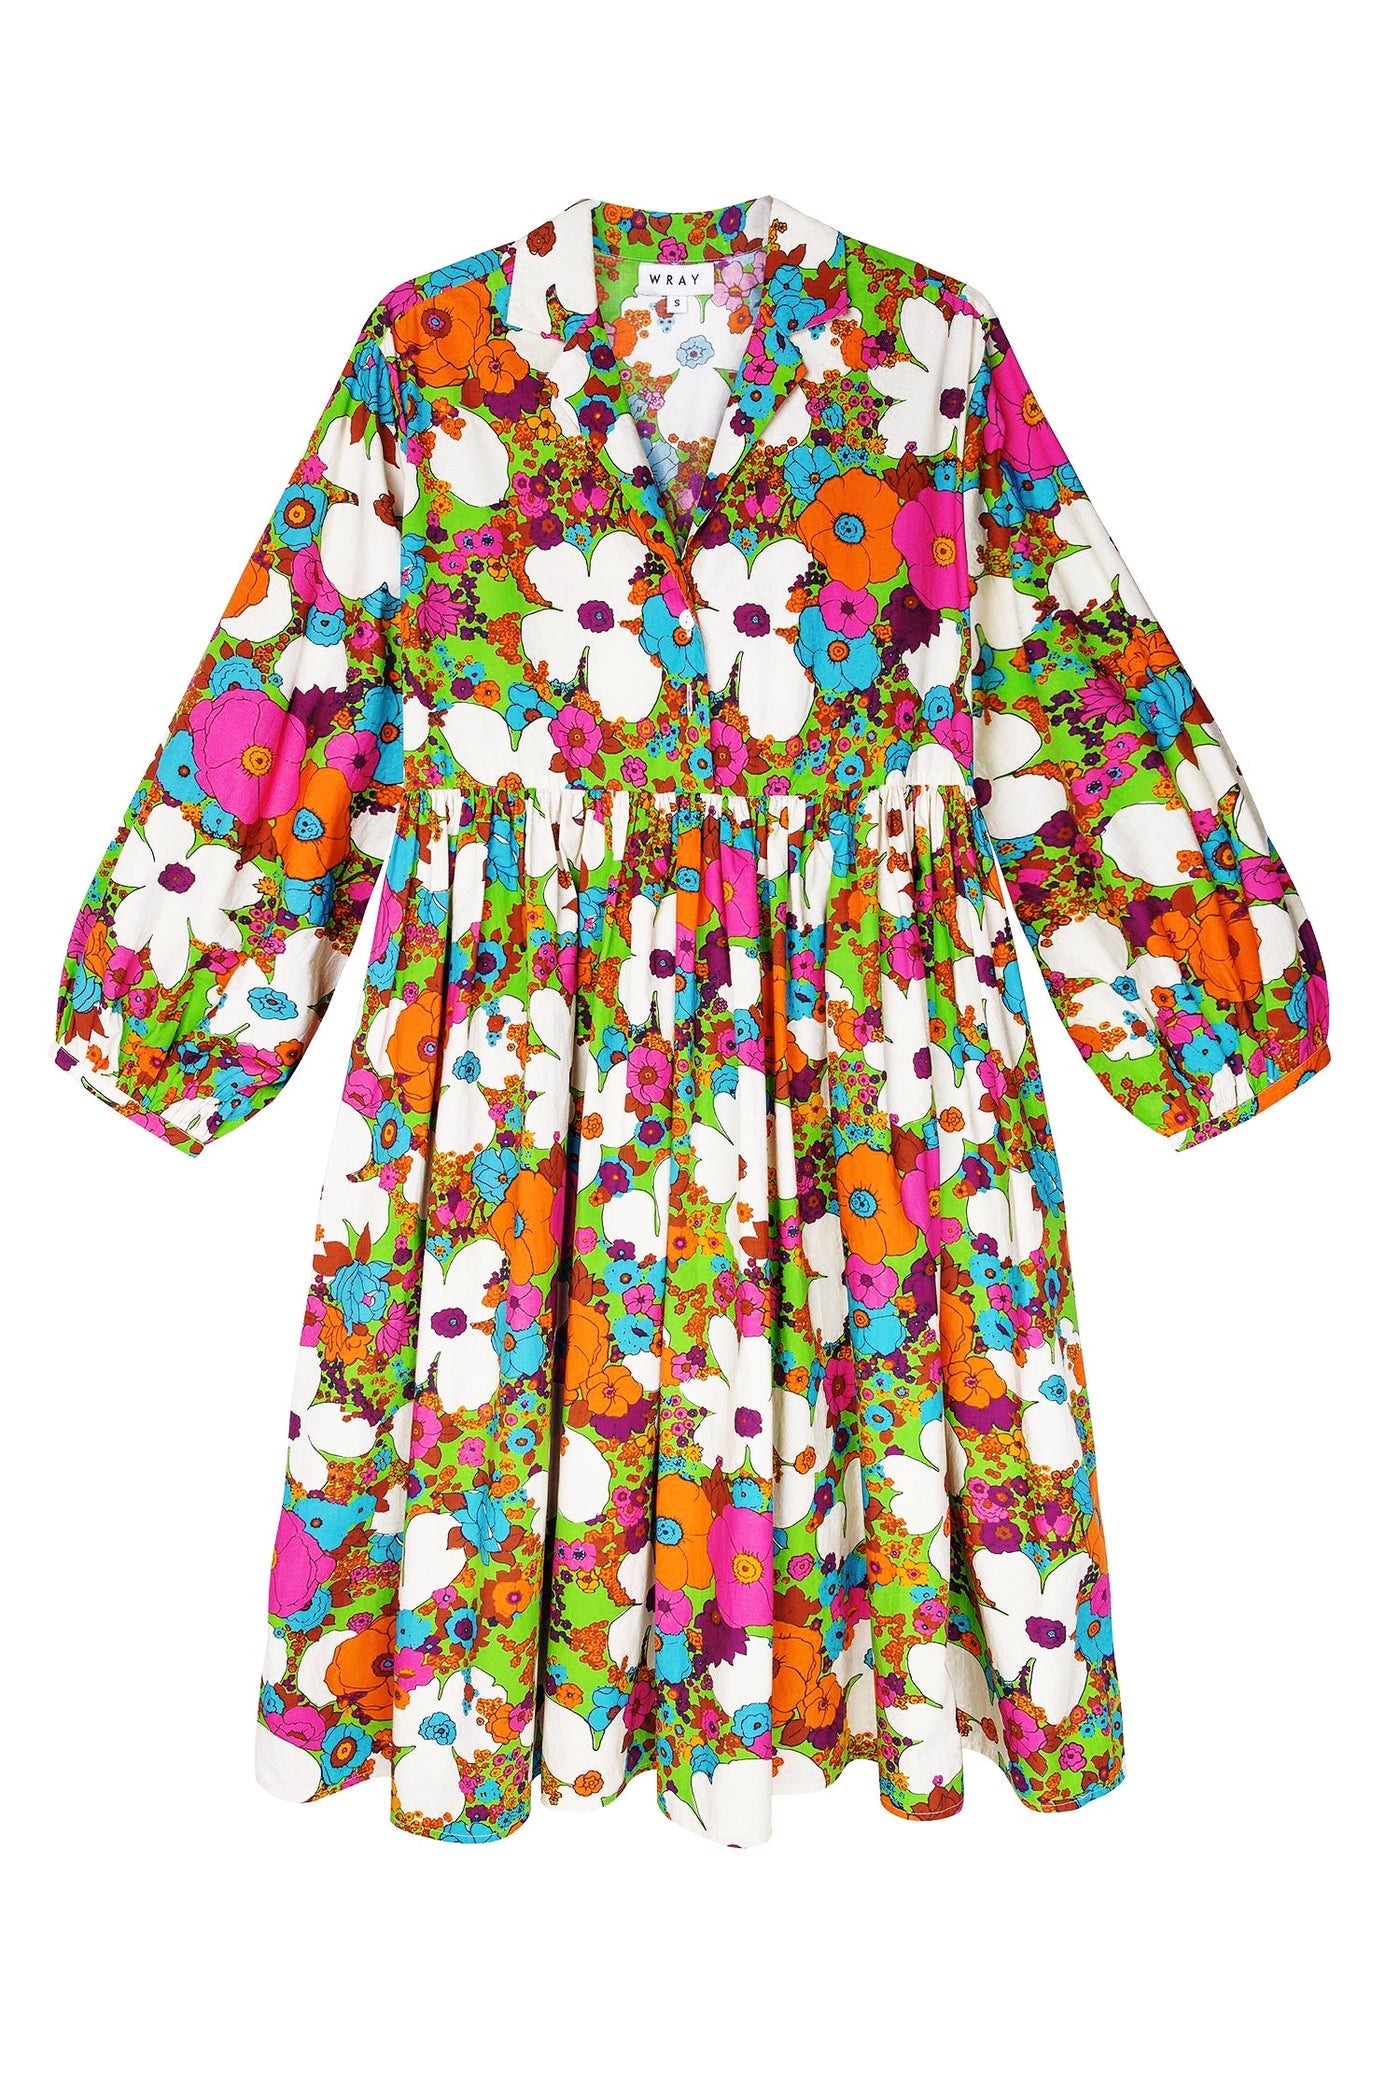 Wray + Quinn Dress Acid Floral